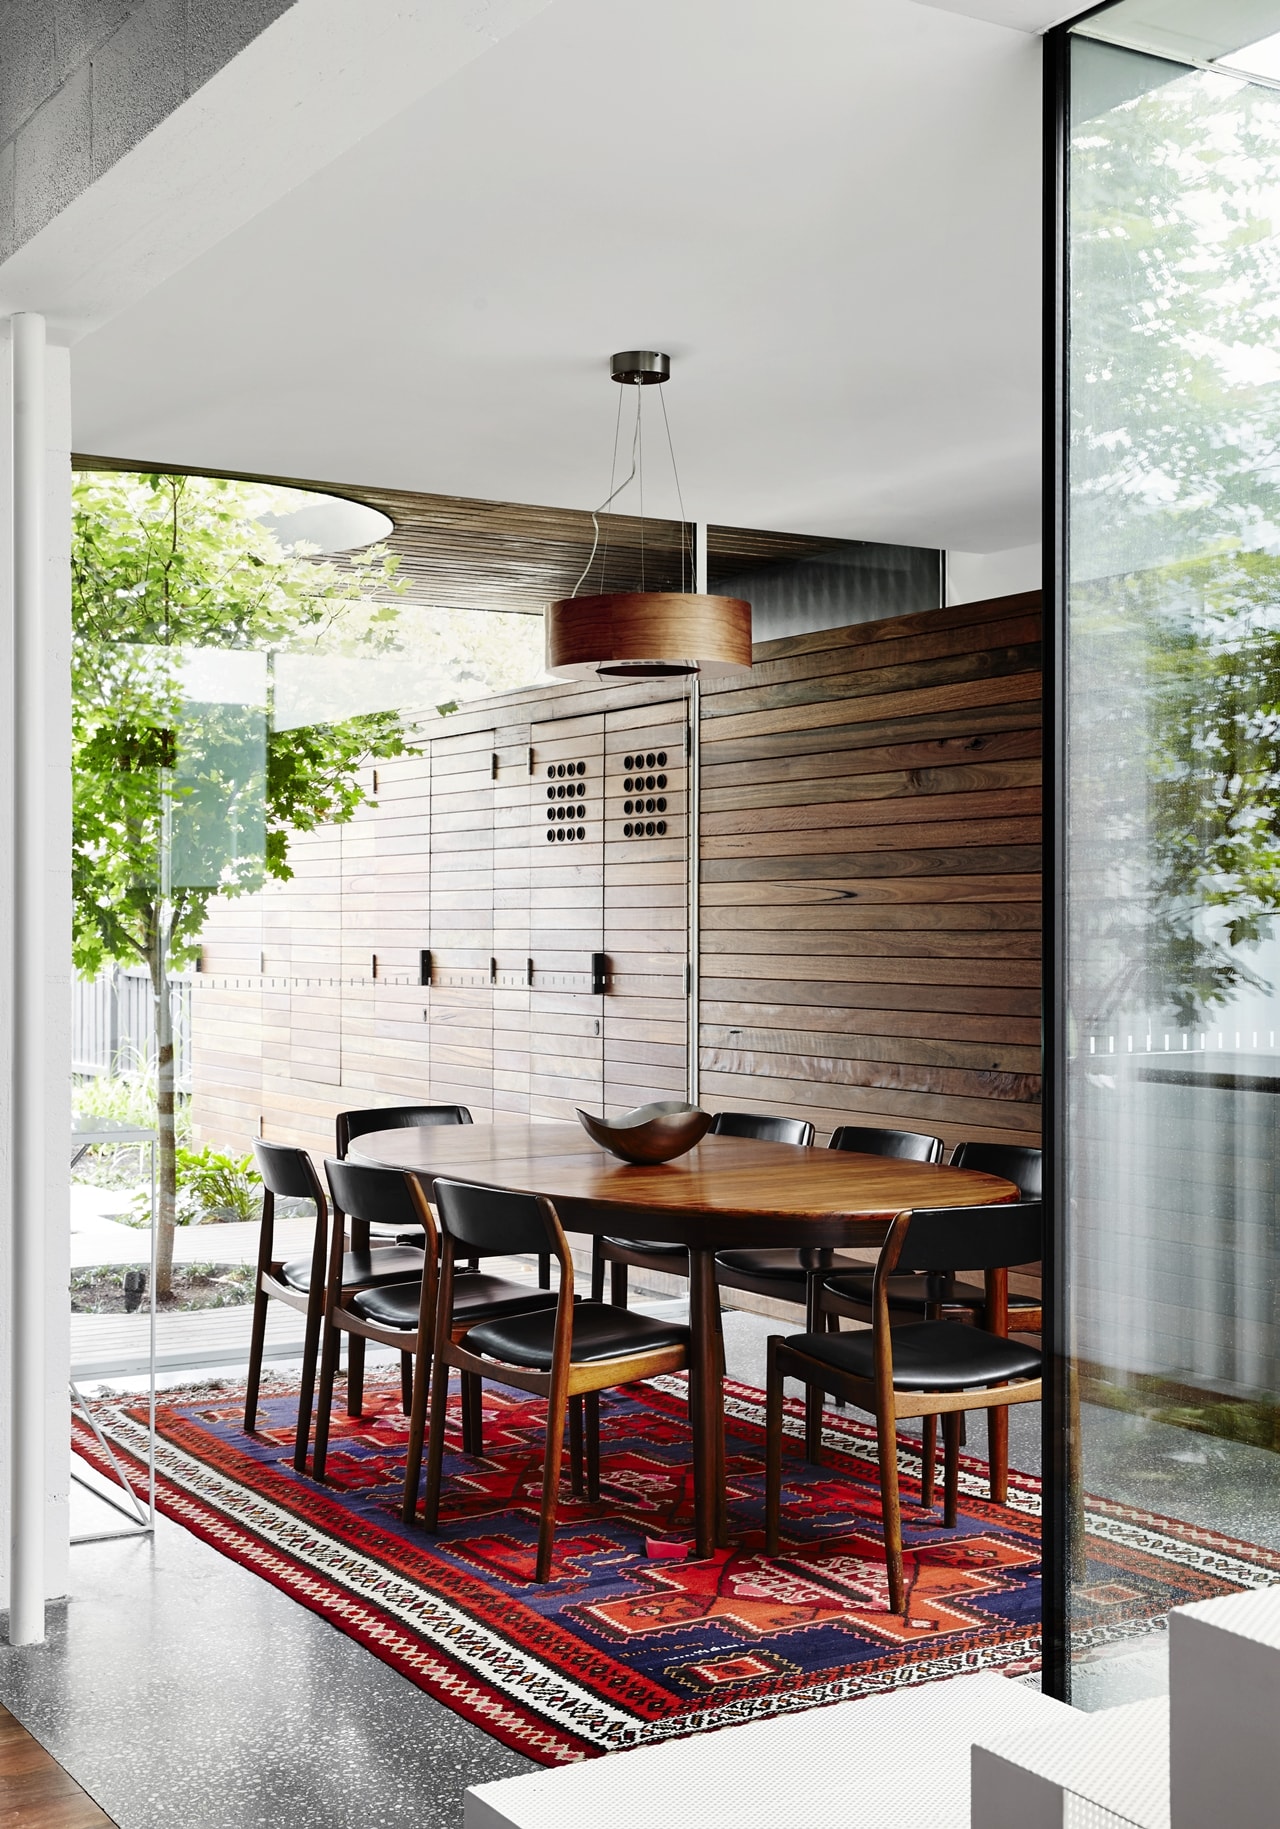 Dining room by Austin Maynard Architects